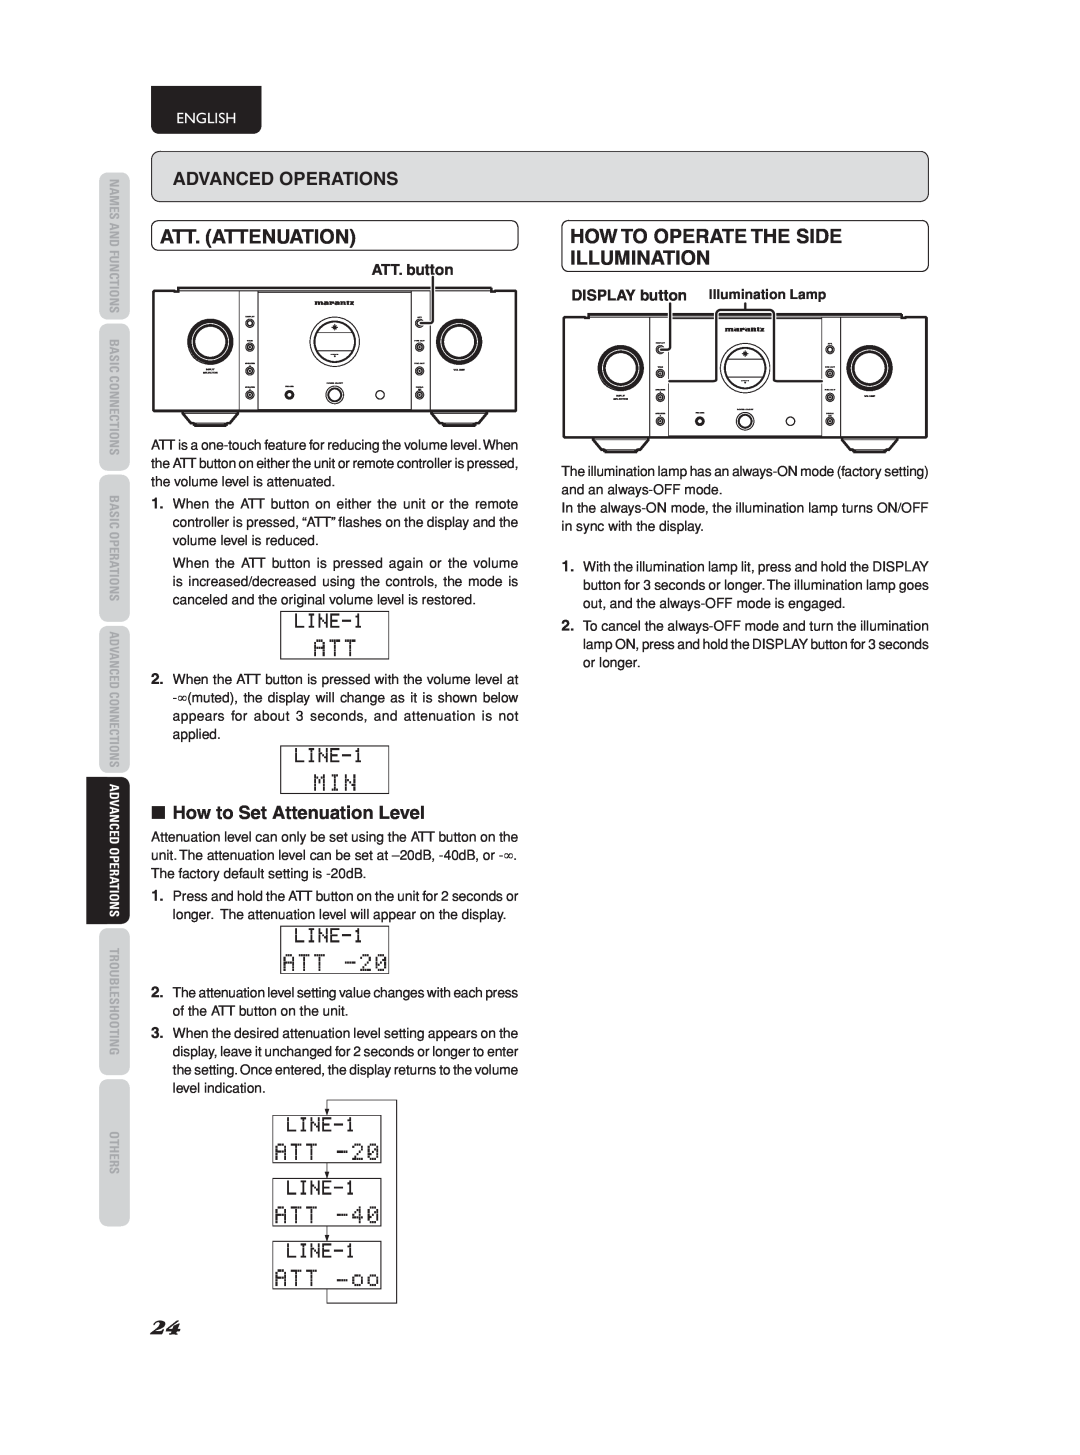 Marantz PM-11S2 Att. Attenuation, How To Operate The Side Illumination, Advanced Operations, 7How to Set Attenuation Level 